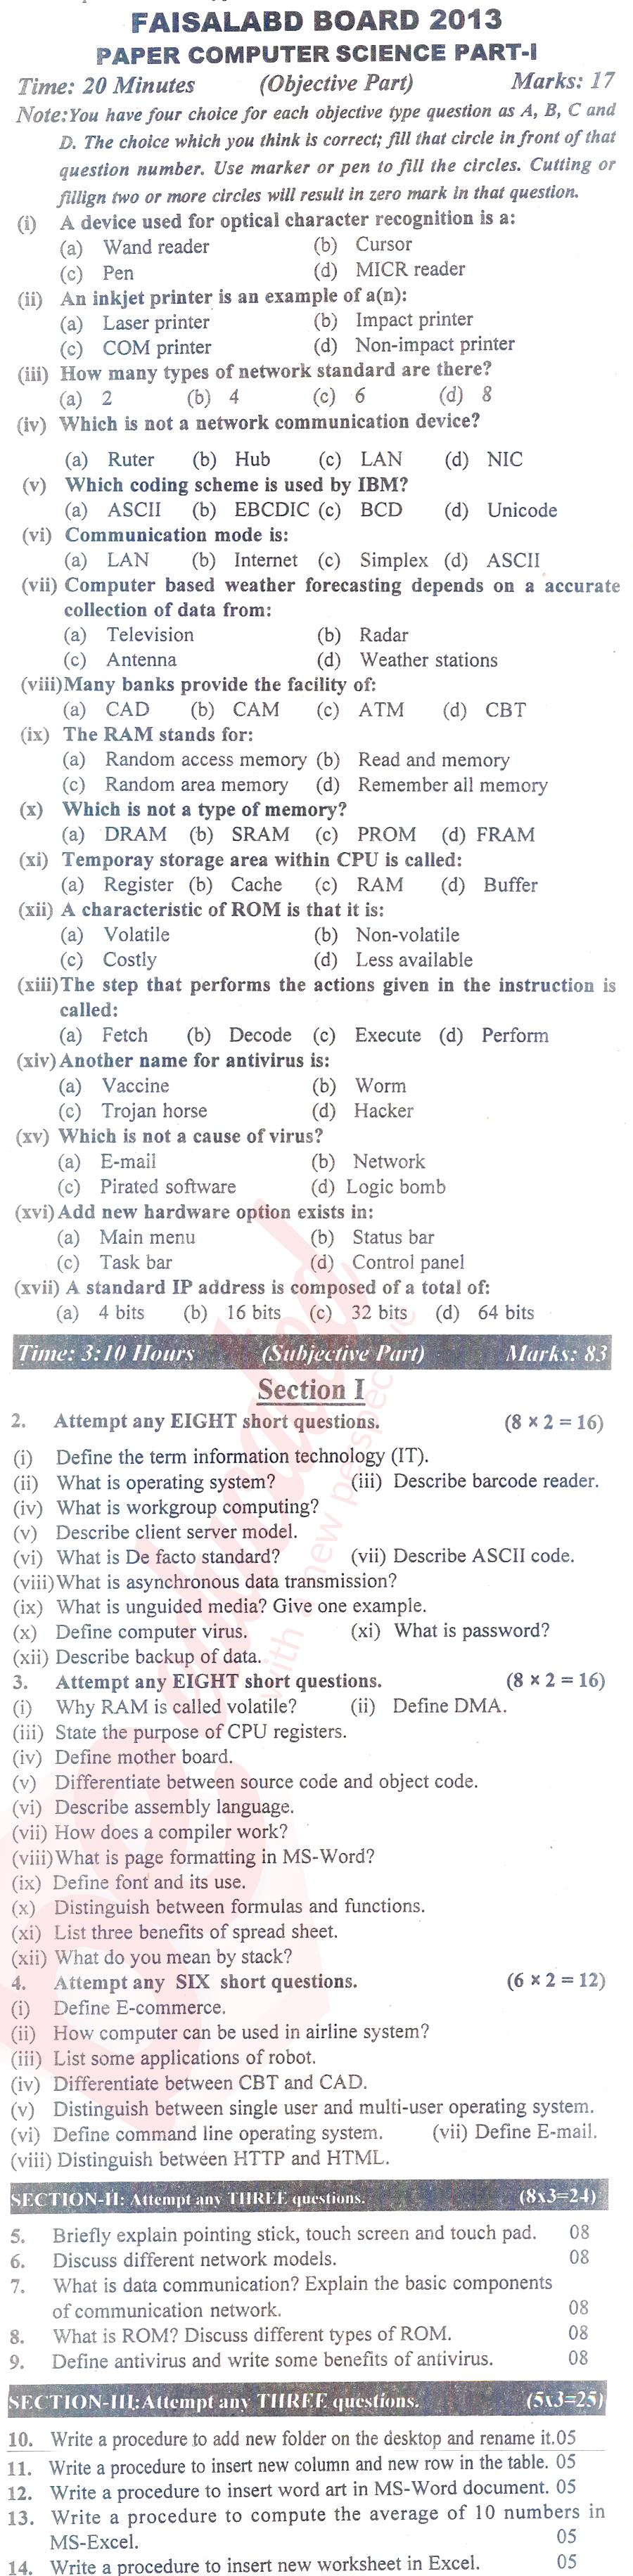 Computer Science ICS Part 1 Past Paper Group 1 BISE Faisalabad 2013